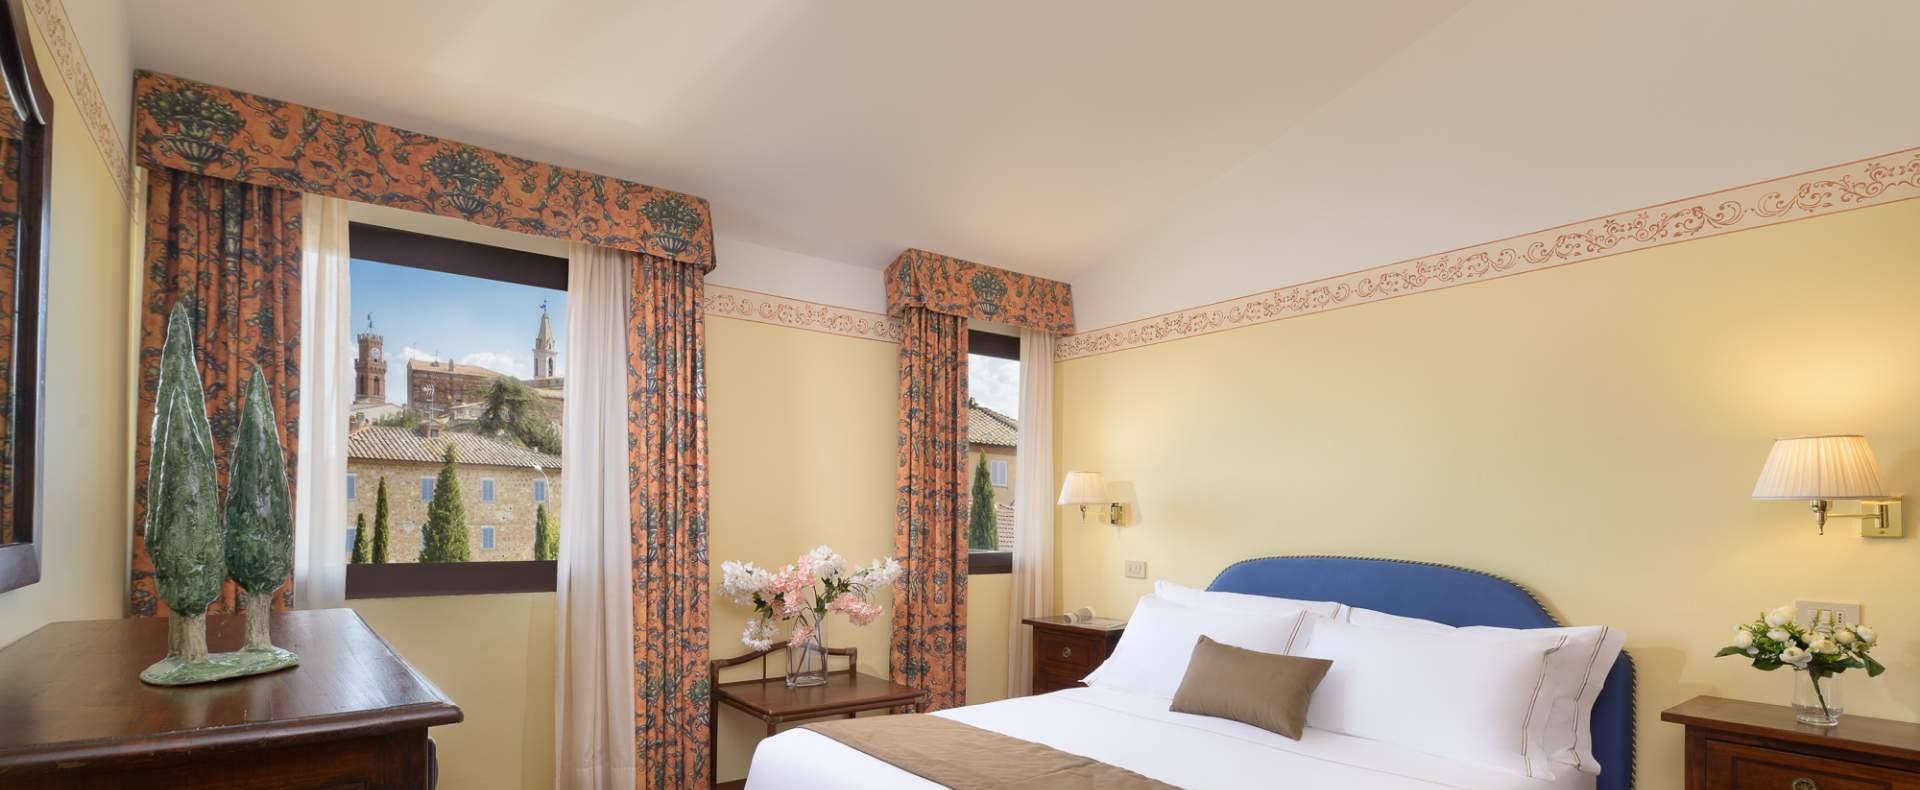 hotelsangregorio en hotel-with-pool-tuscany 023